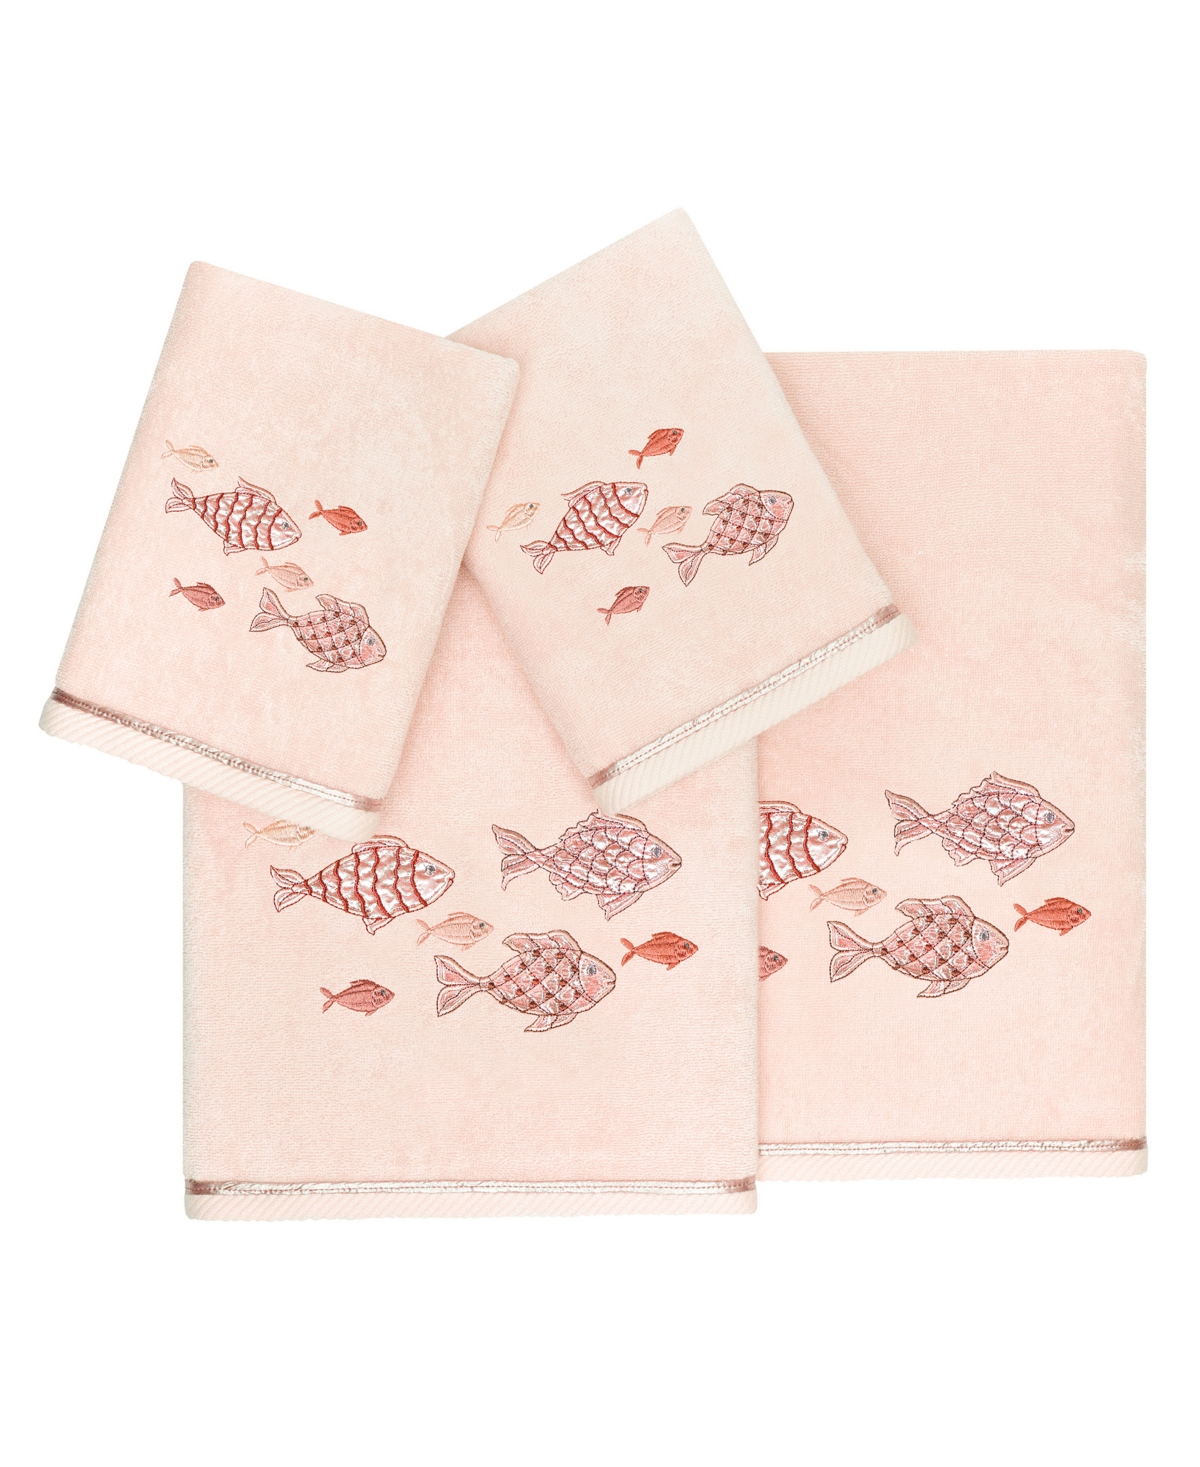 Linum Home Textiles Turkish Cotton Figi Embellished Towel Set, 4 Piece Bedding In Blush